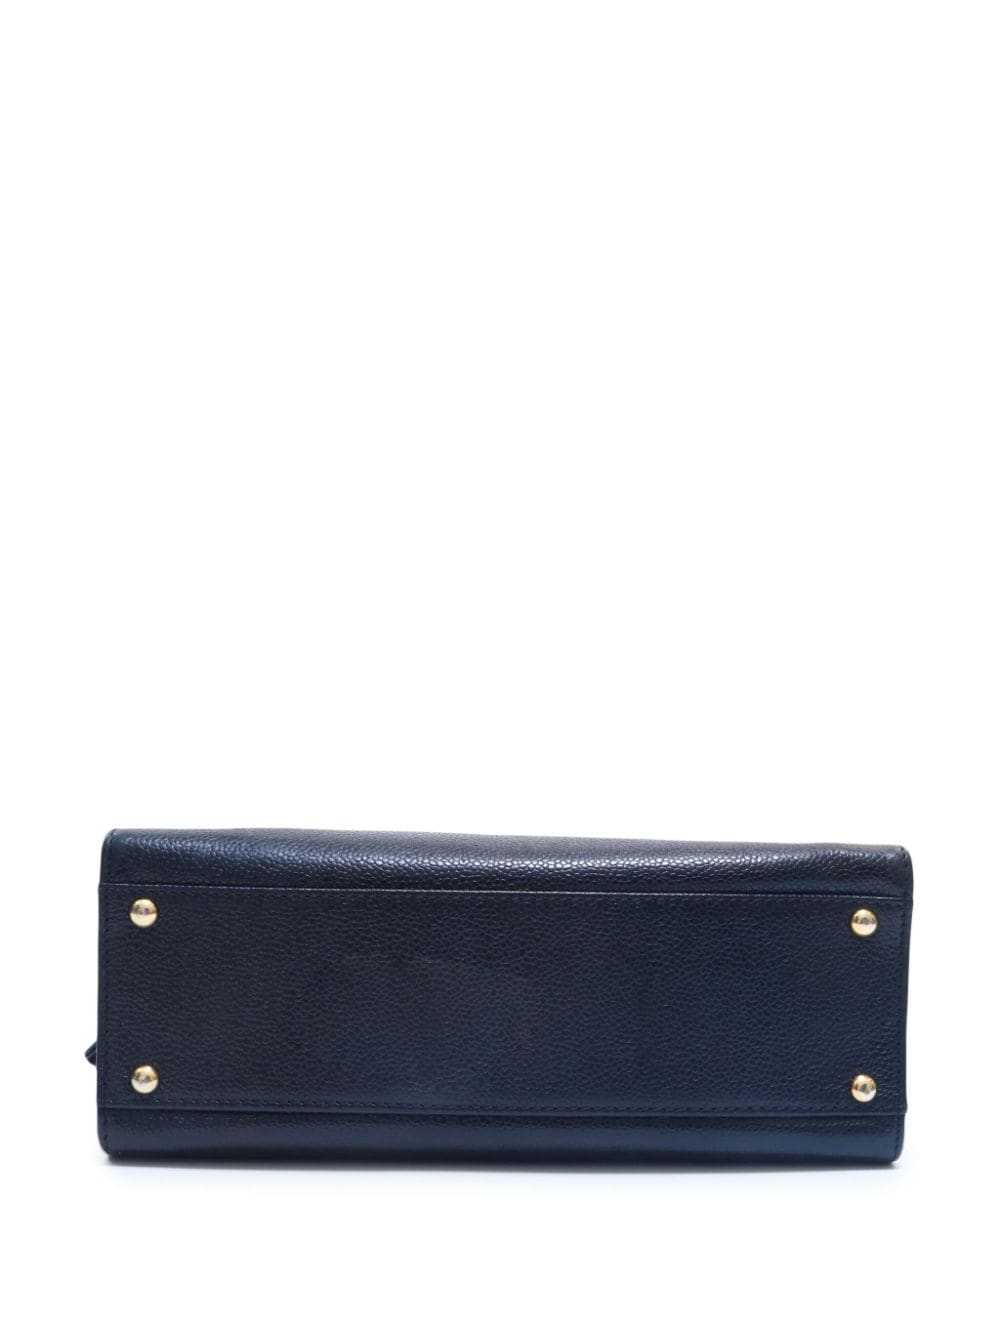 CHANEL Pre-Owned 1998 CC leather handbag - Black - image 5